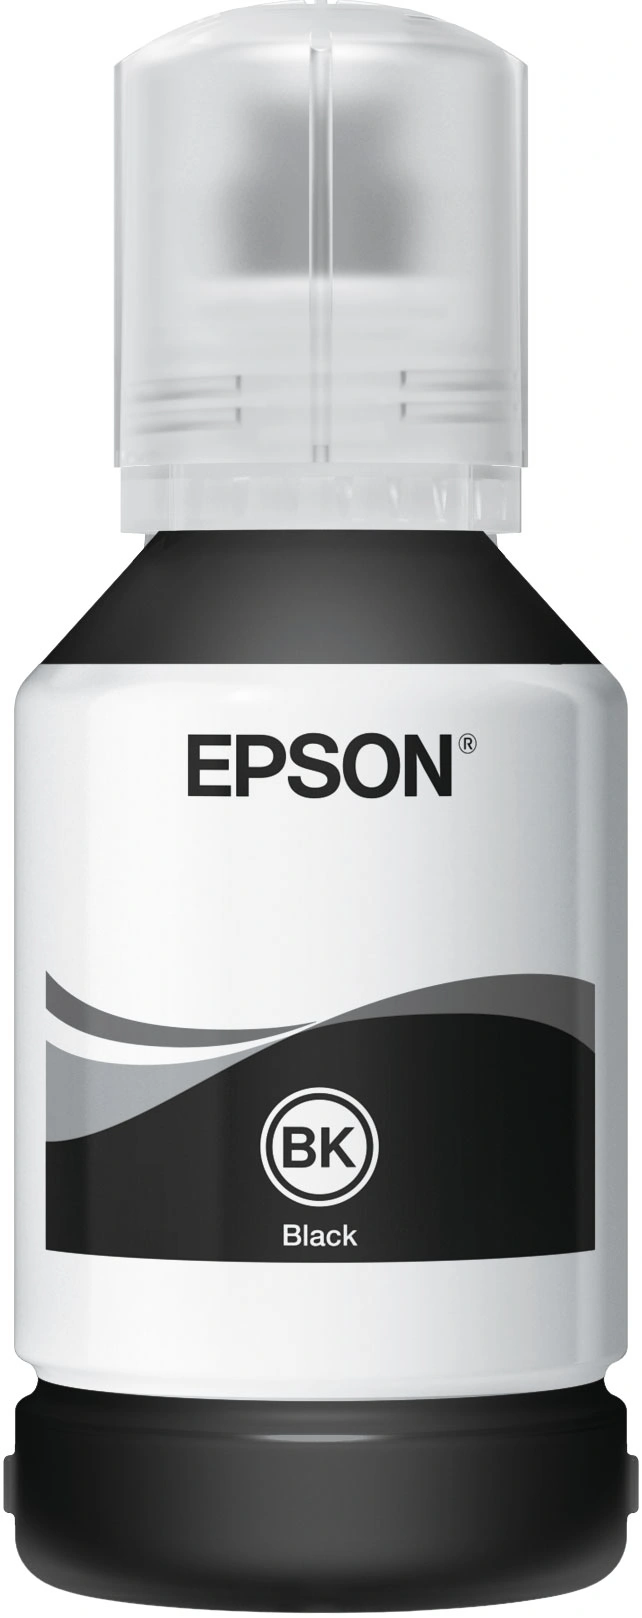 Epson Ecotank 105, Black